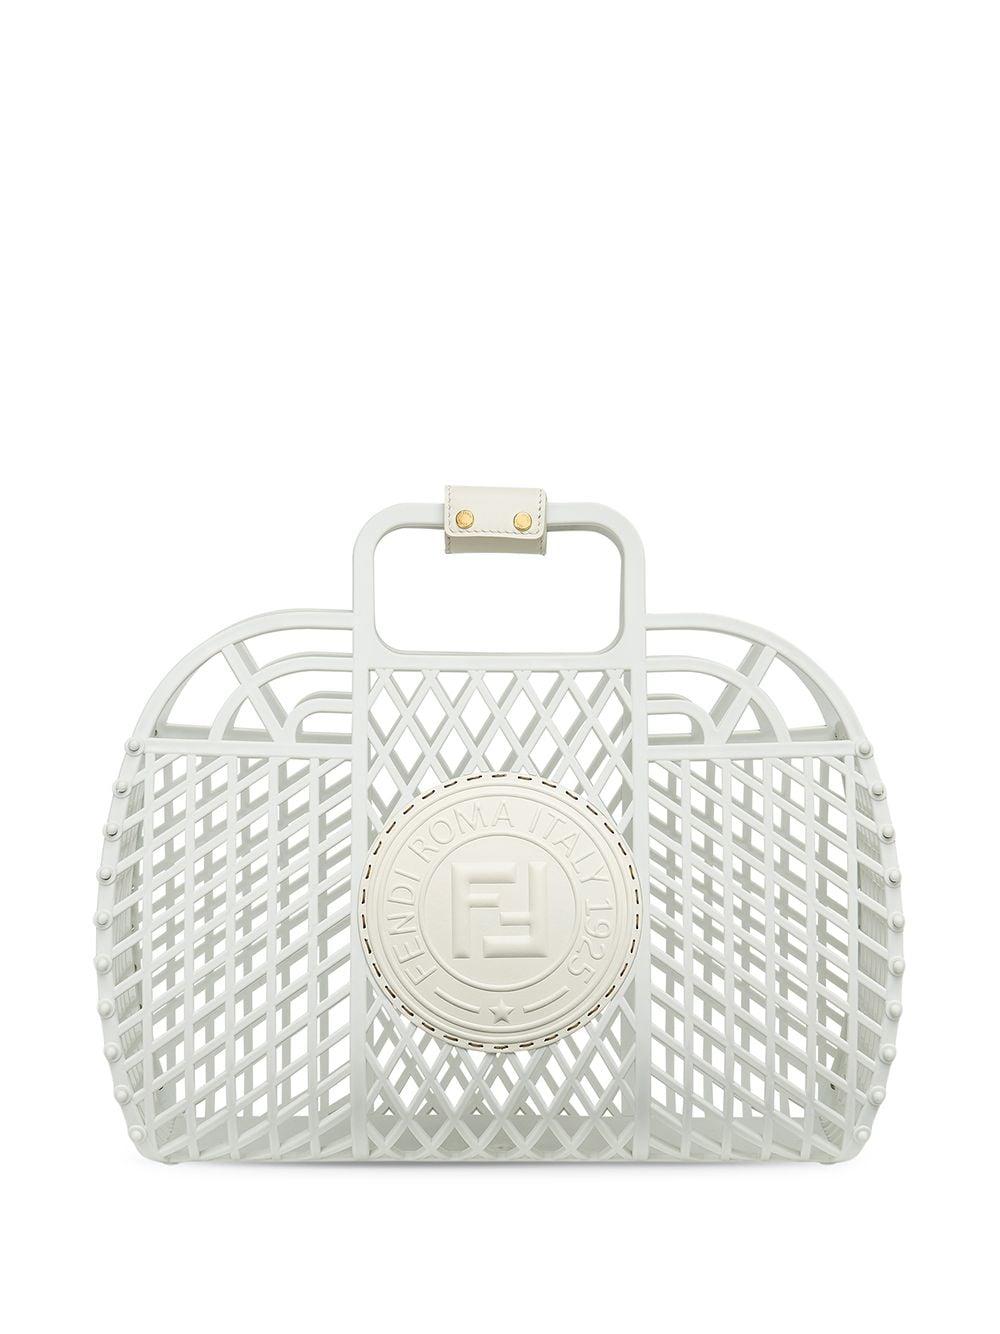 Fendi Medium Ff-logo Basket Bag in White | Lyst